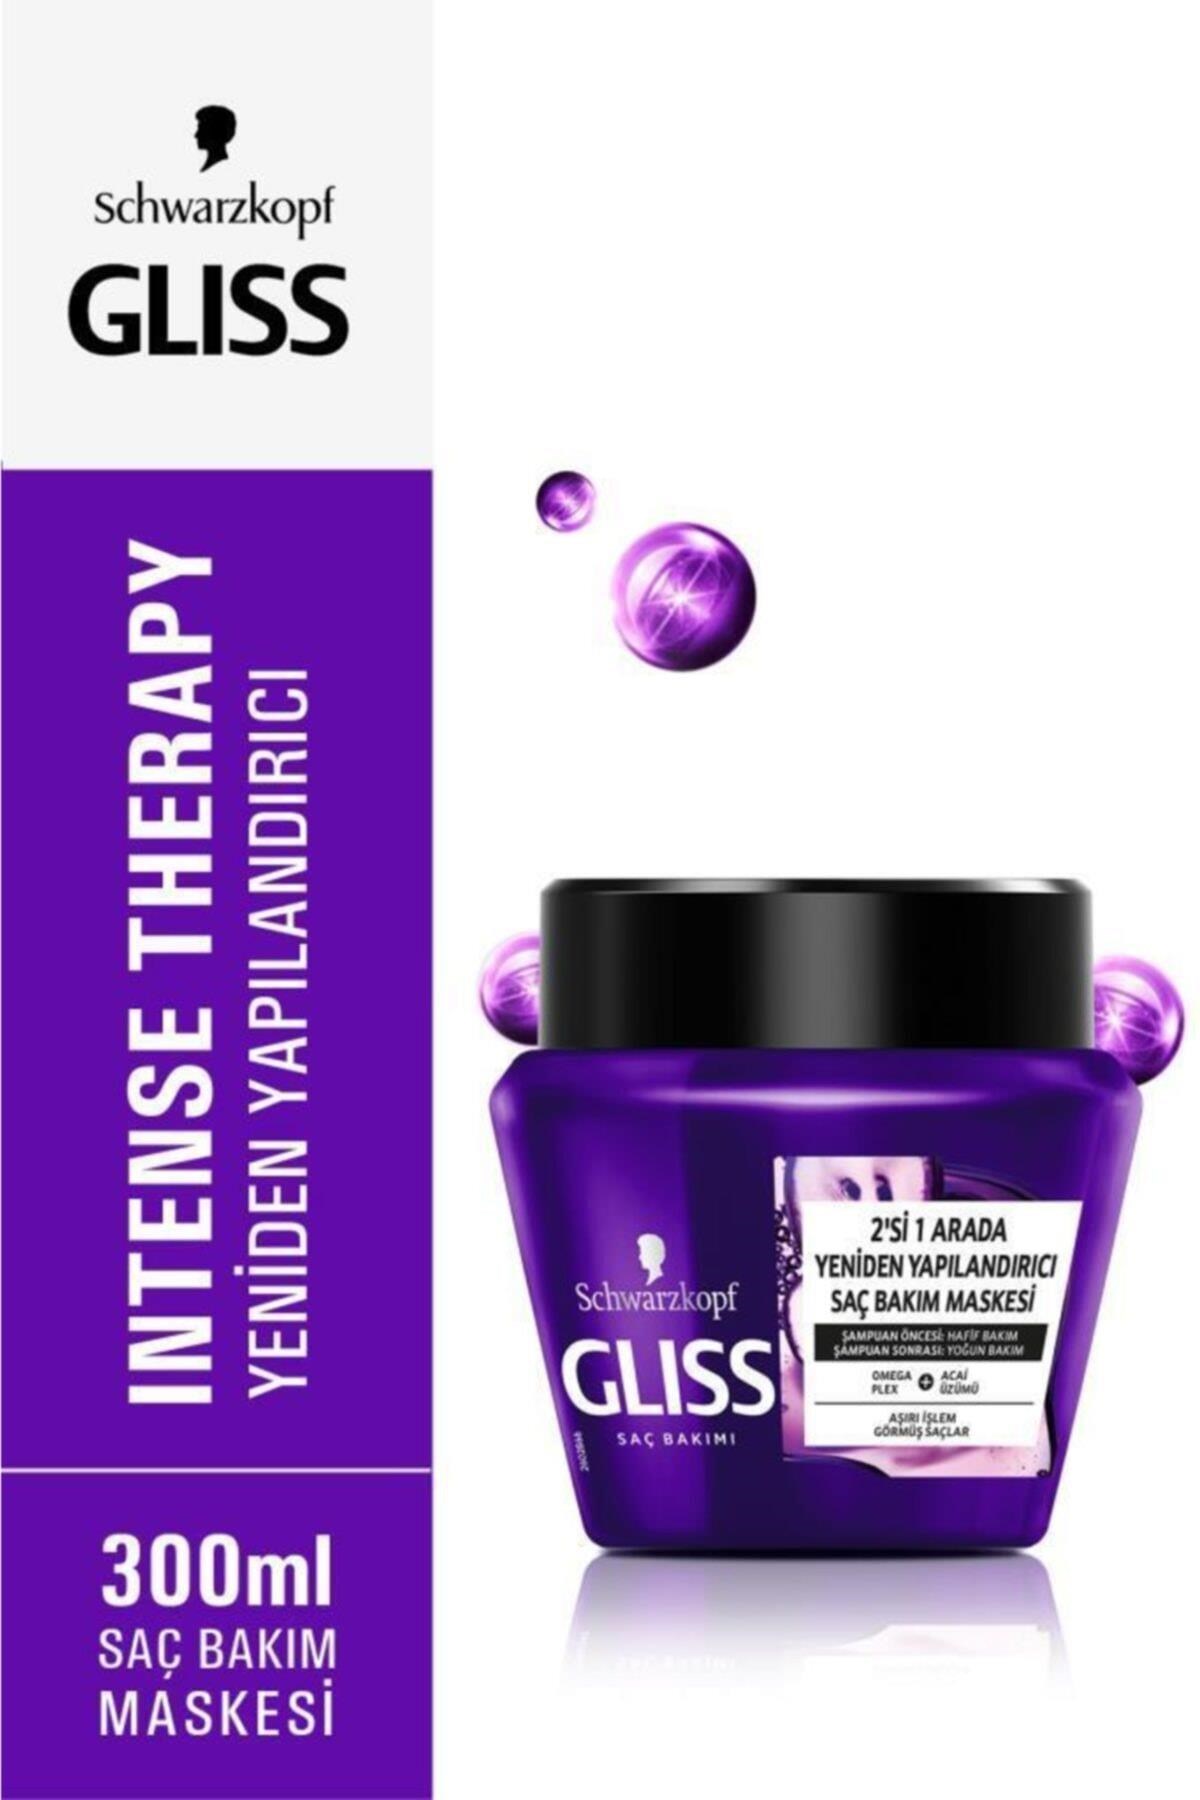 GLISS Intense Theraphy Saç Maskesi 300ml | Farma Ucuz